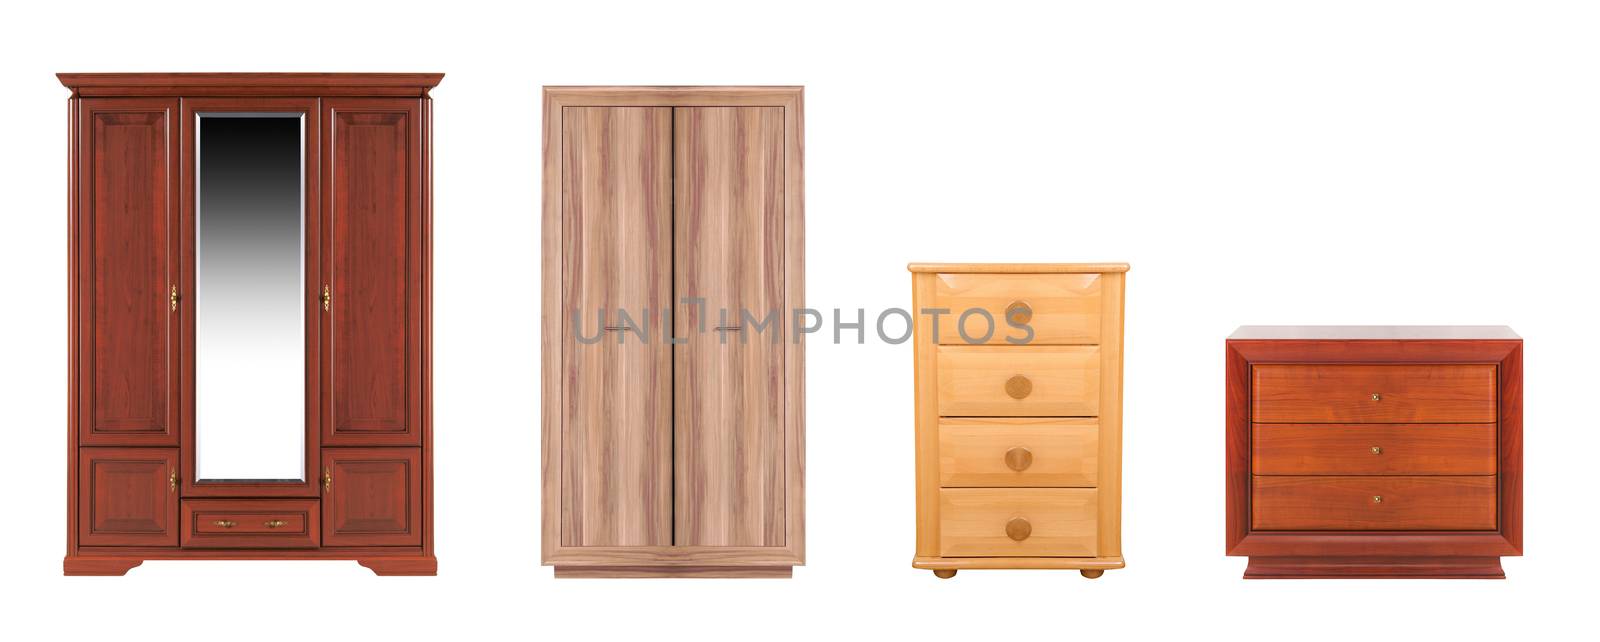 different modern wooden wardrobes by ozaiachin